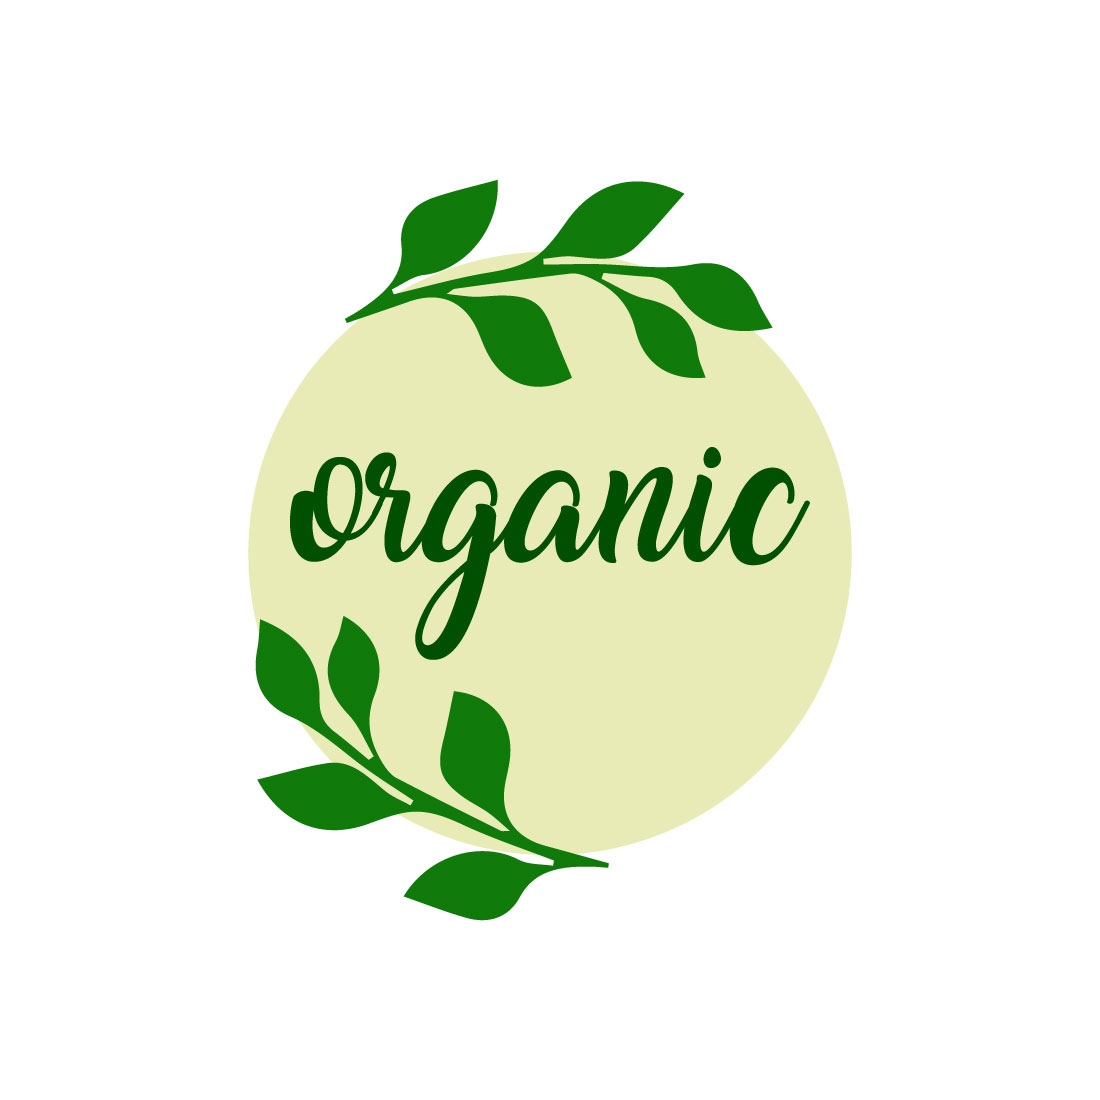 Free minimalist organic logo preview image.